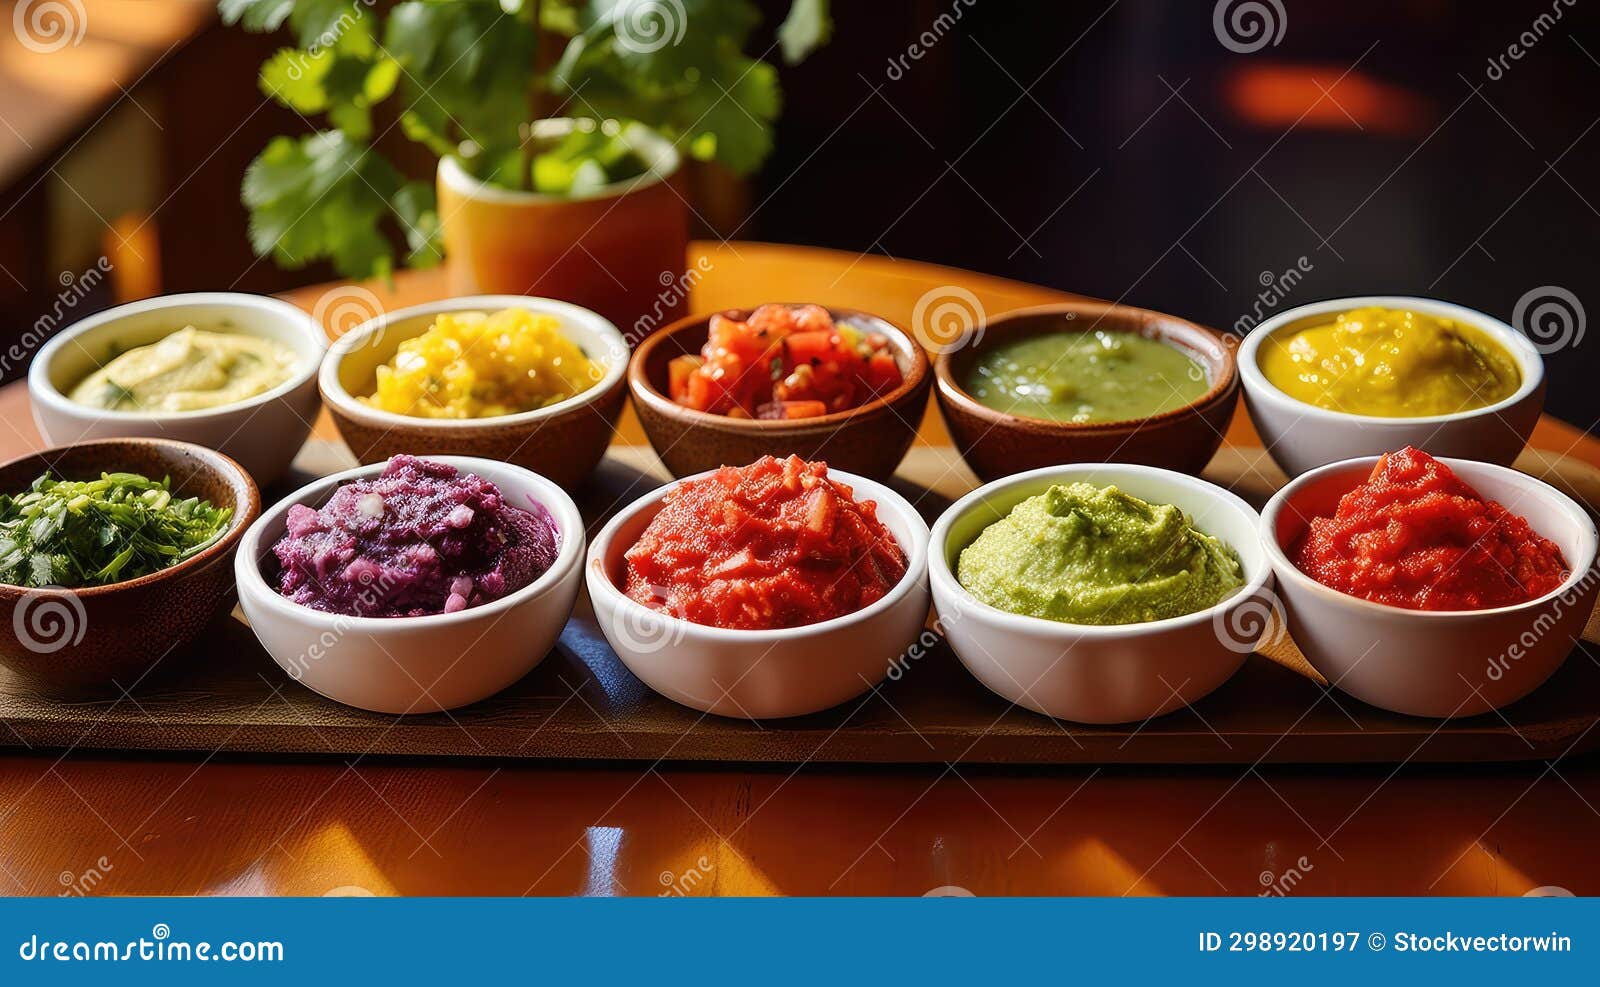 delicious salsa mexican food vibrant